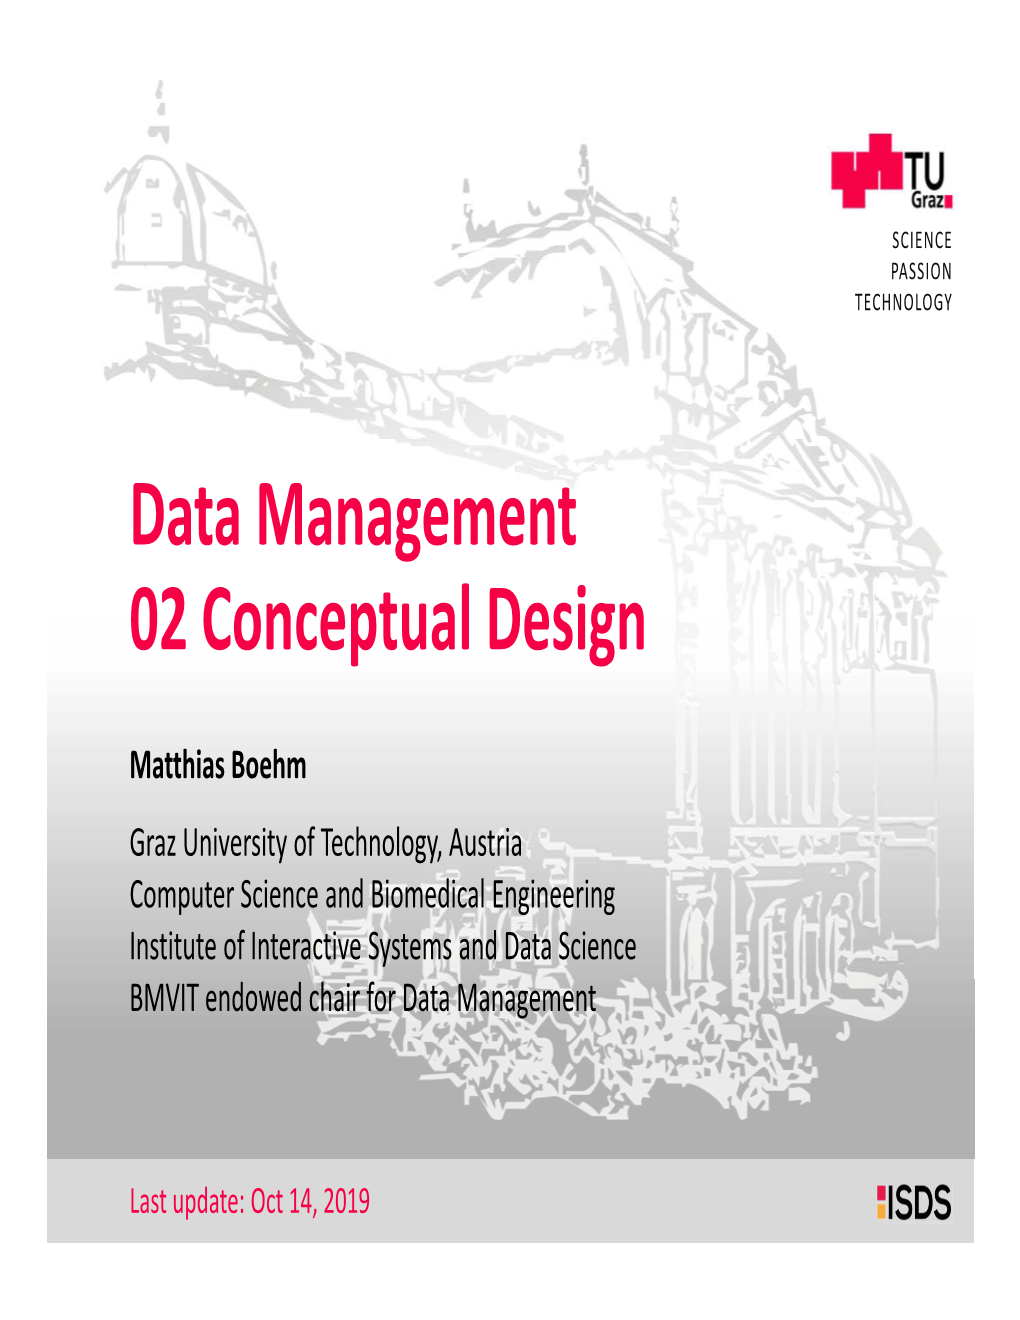 Data Management 02 Conceptual Design